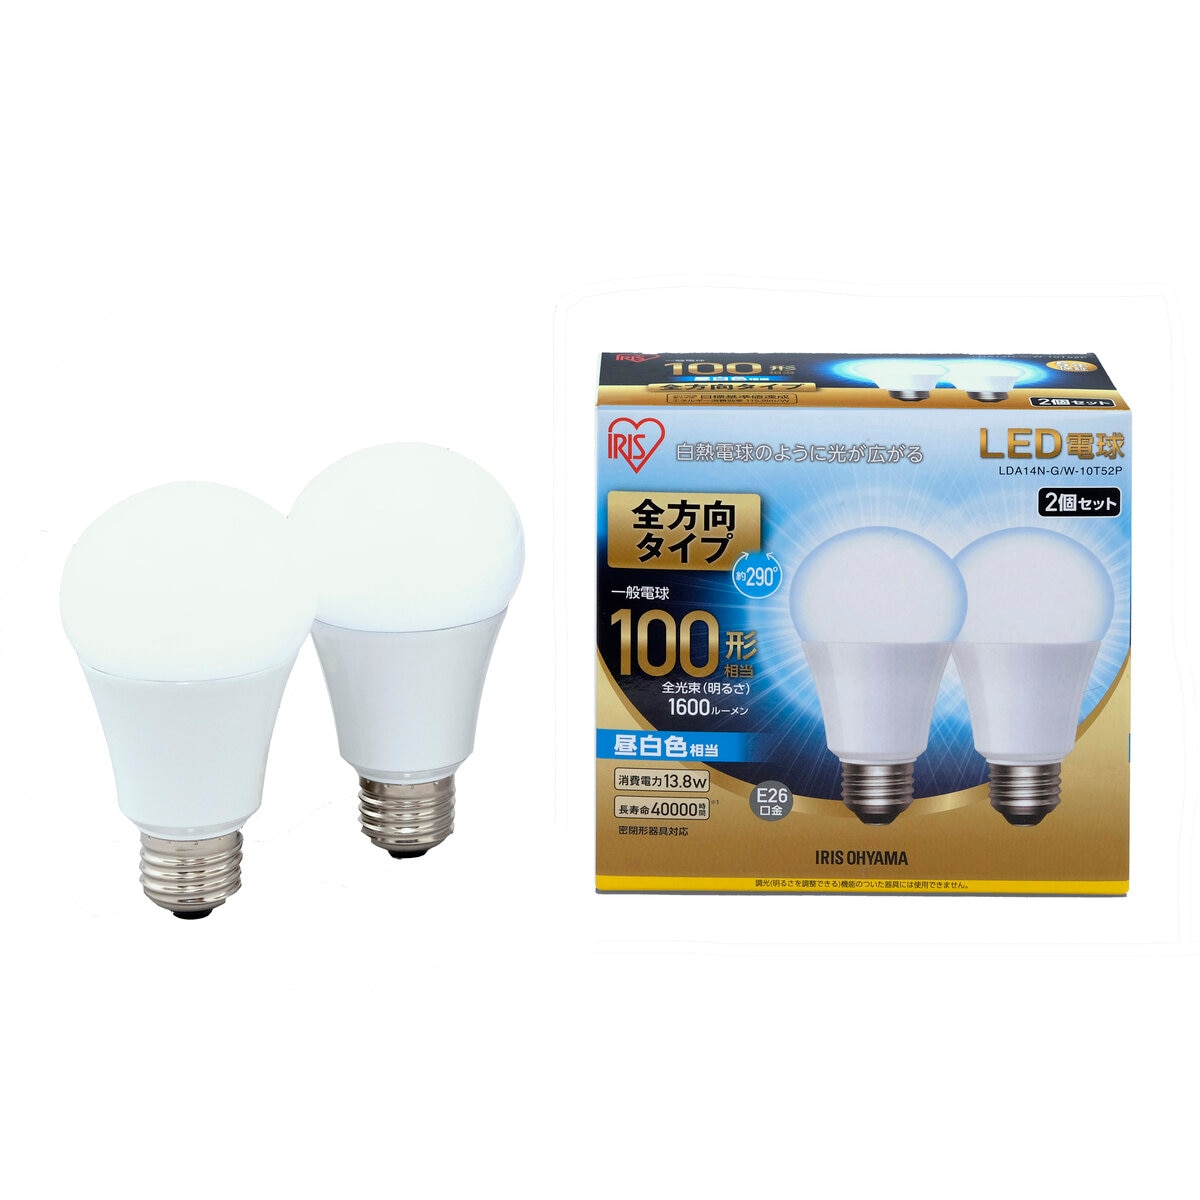 IRIS OHYAMA LED Bulb E26 100W 2pack